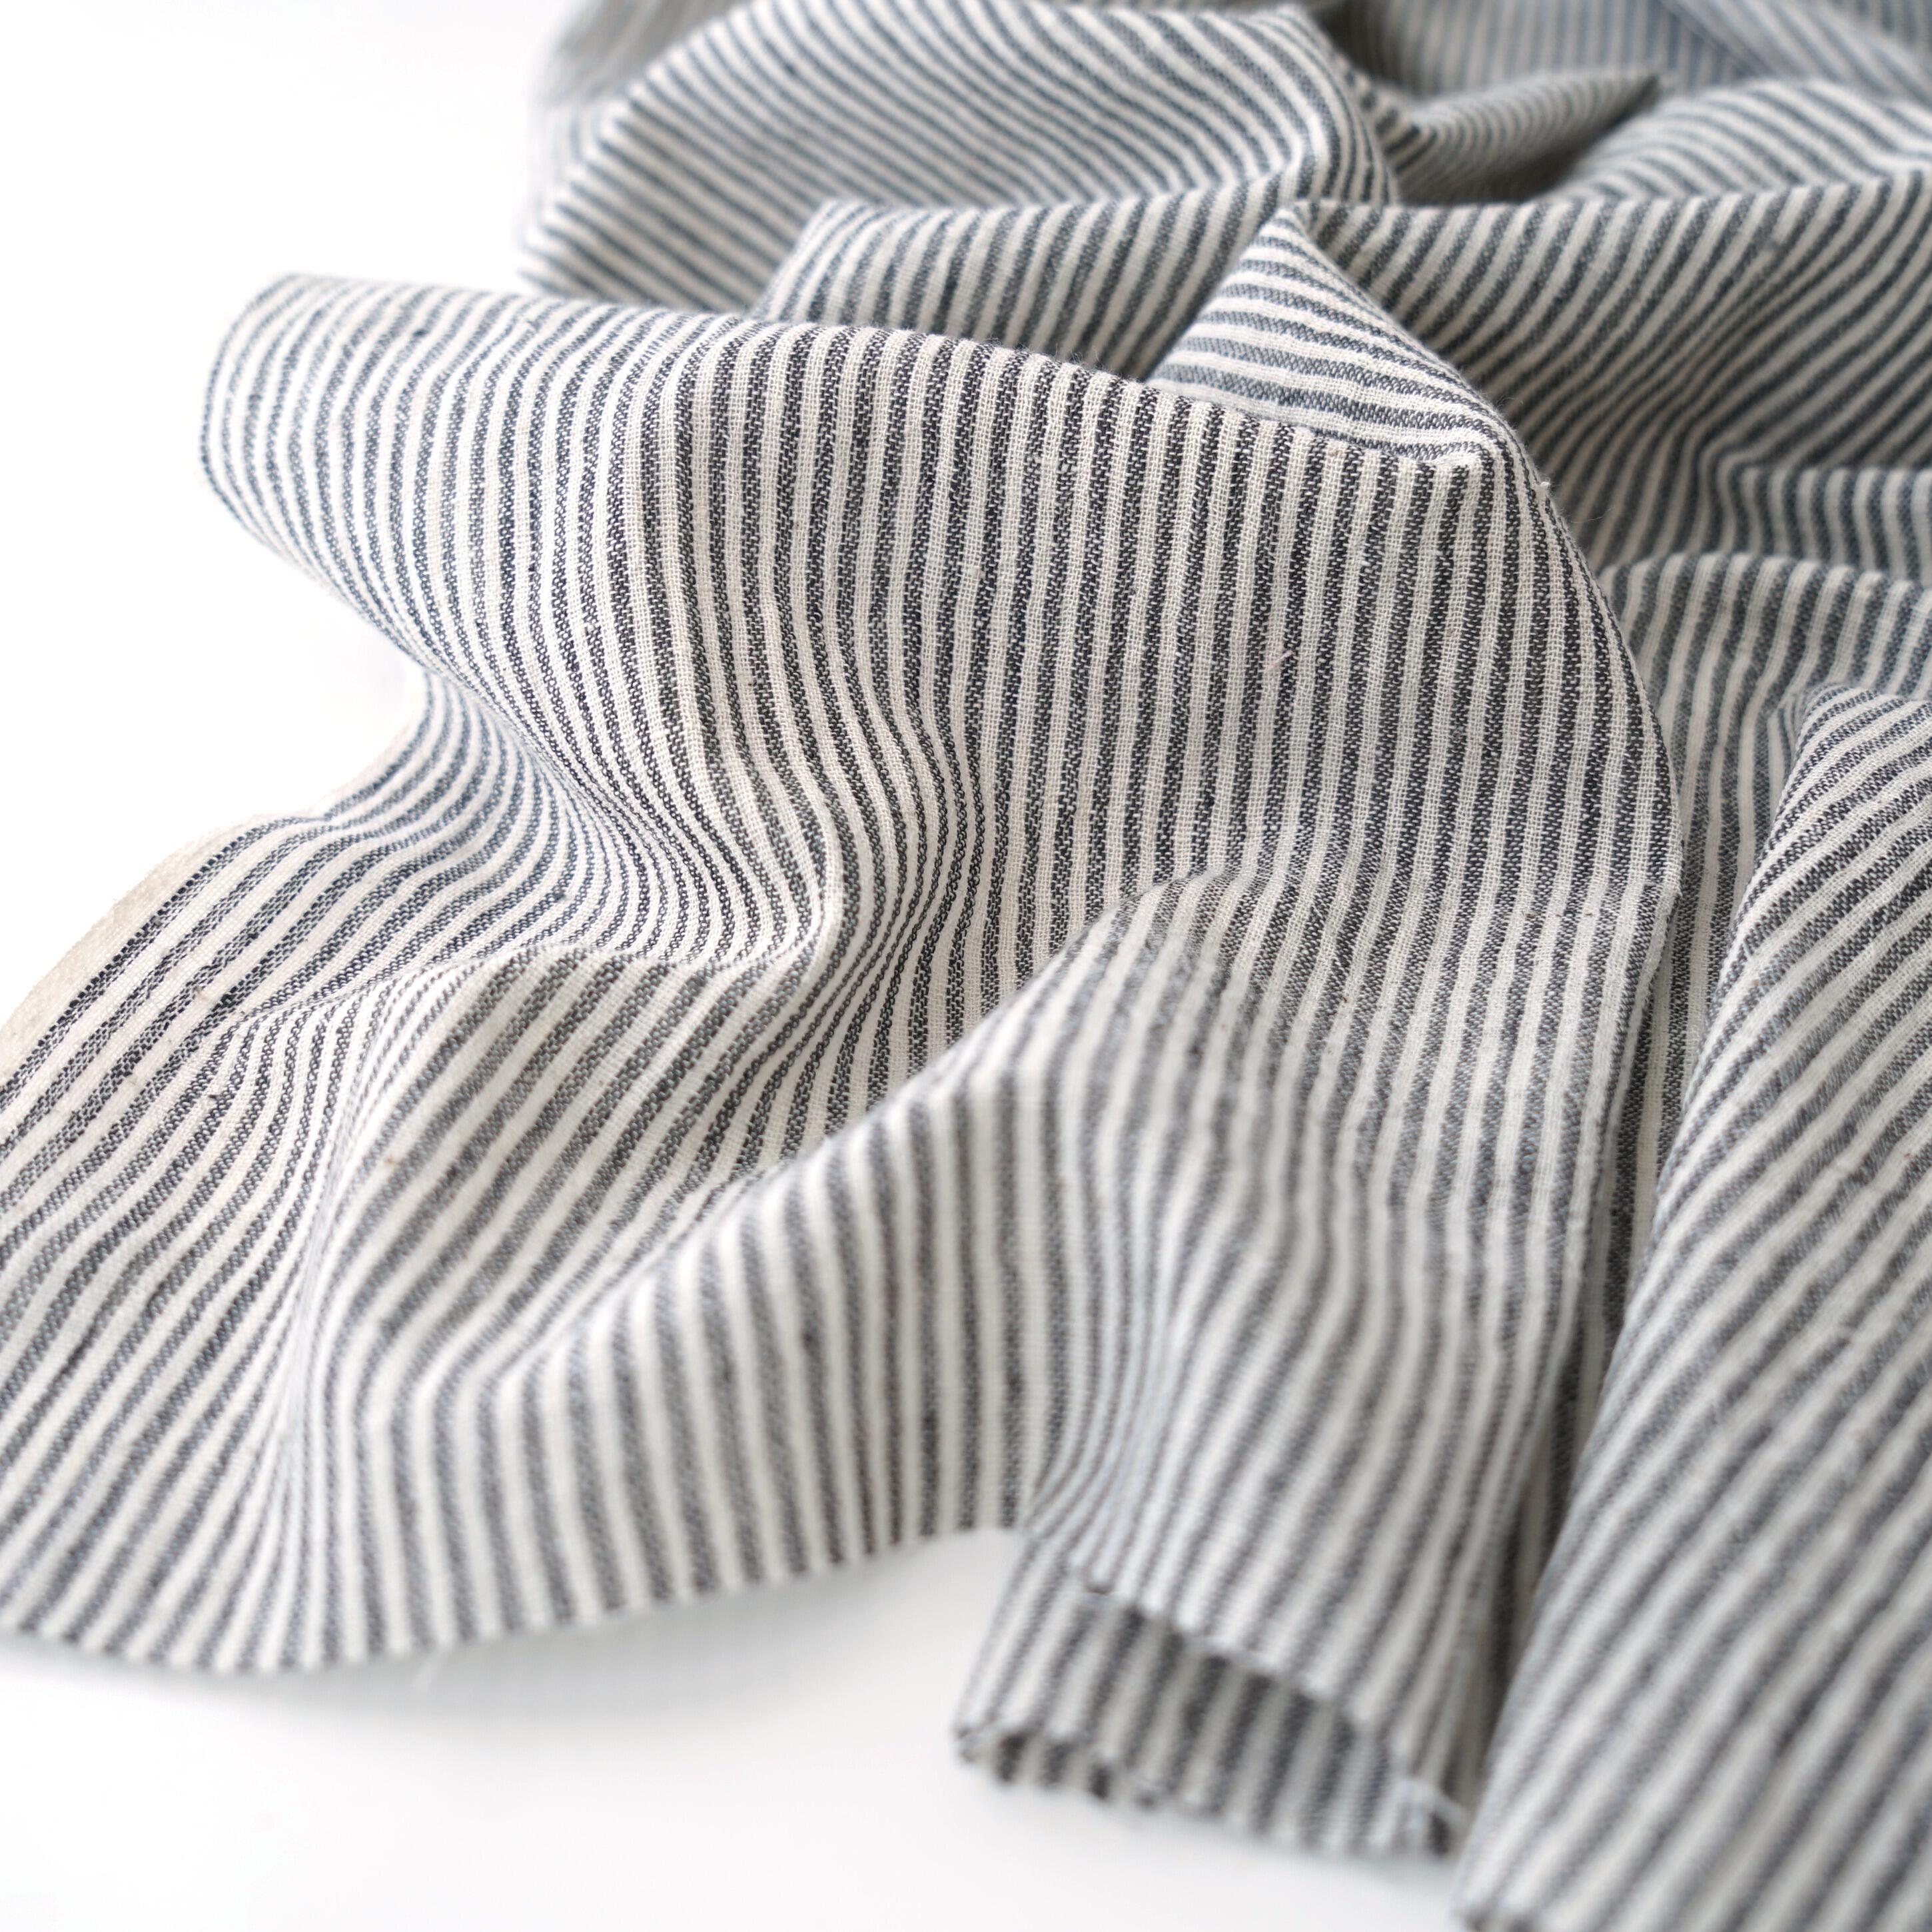 Organic Kala Cotton - Handloom Woven - Natural Dye - Charcoal Black - Stripes - One By One - Contrast